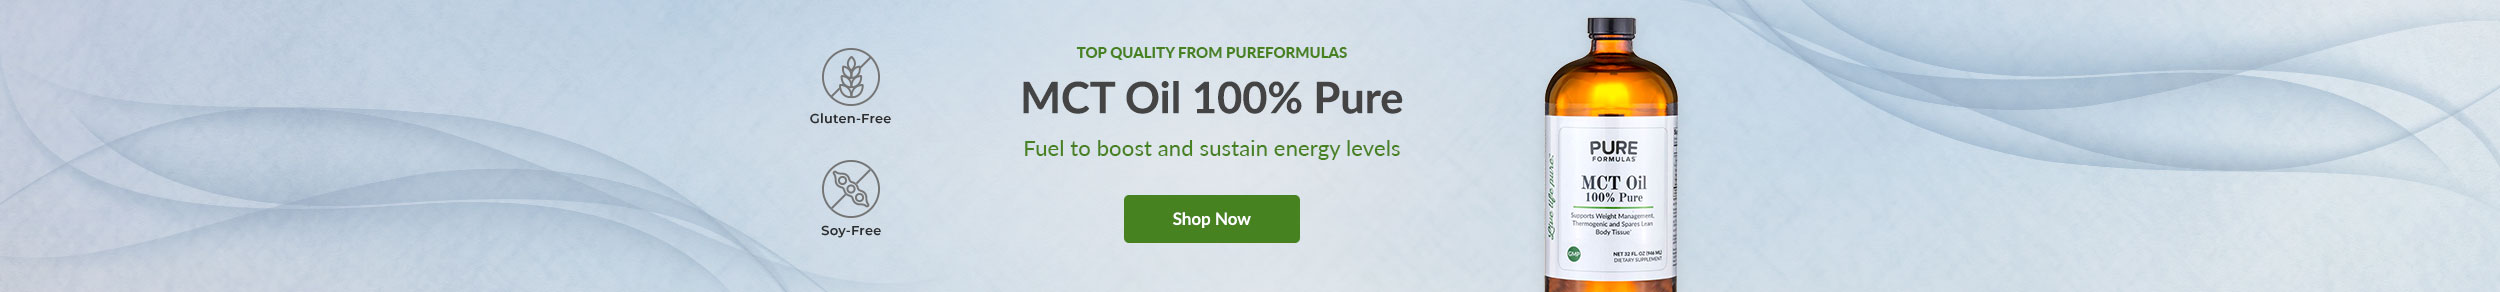 https://i3.pureformulas.net/images/static/Pureformulas-Energy-Support-MCT-Oil_slide2_062318.jpg